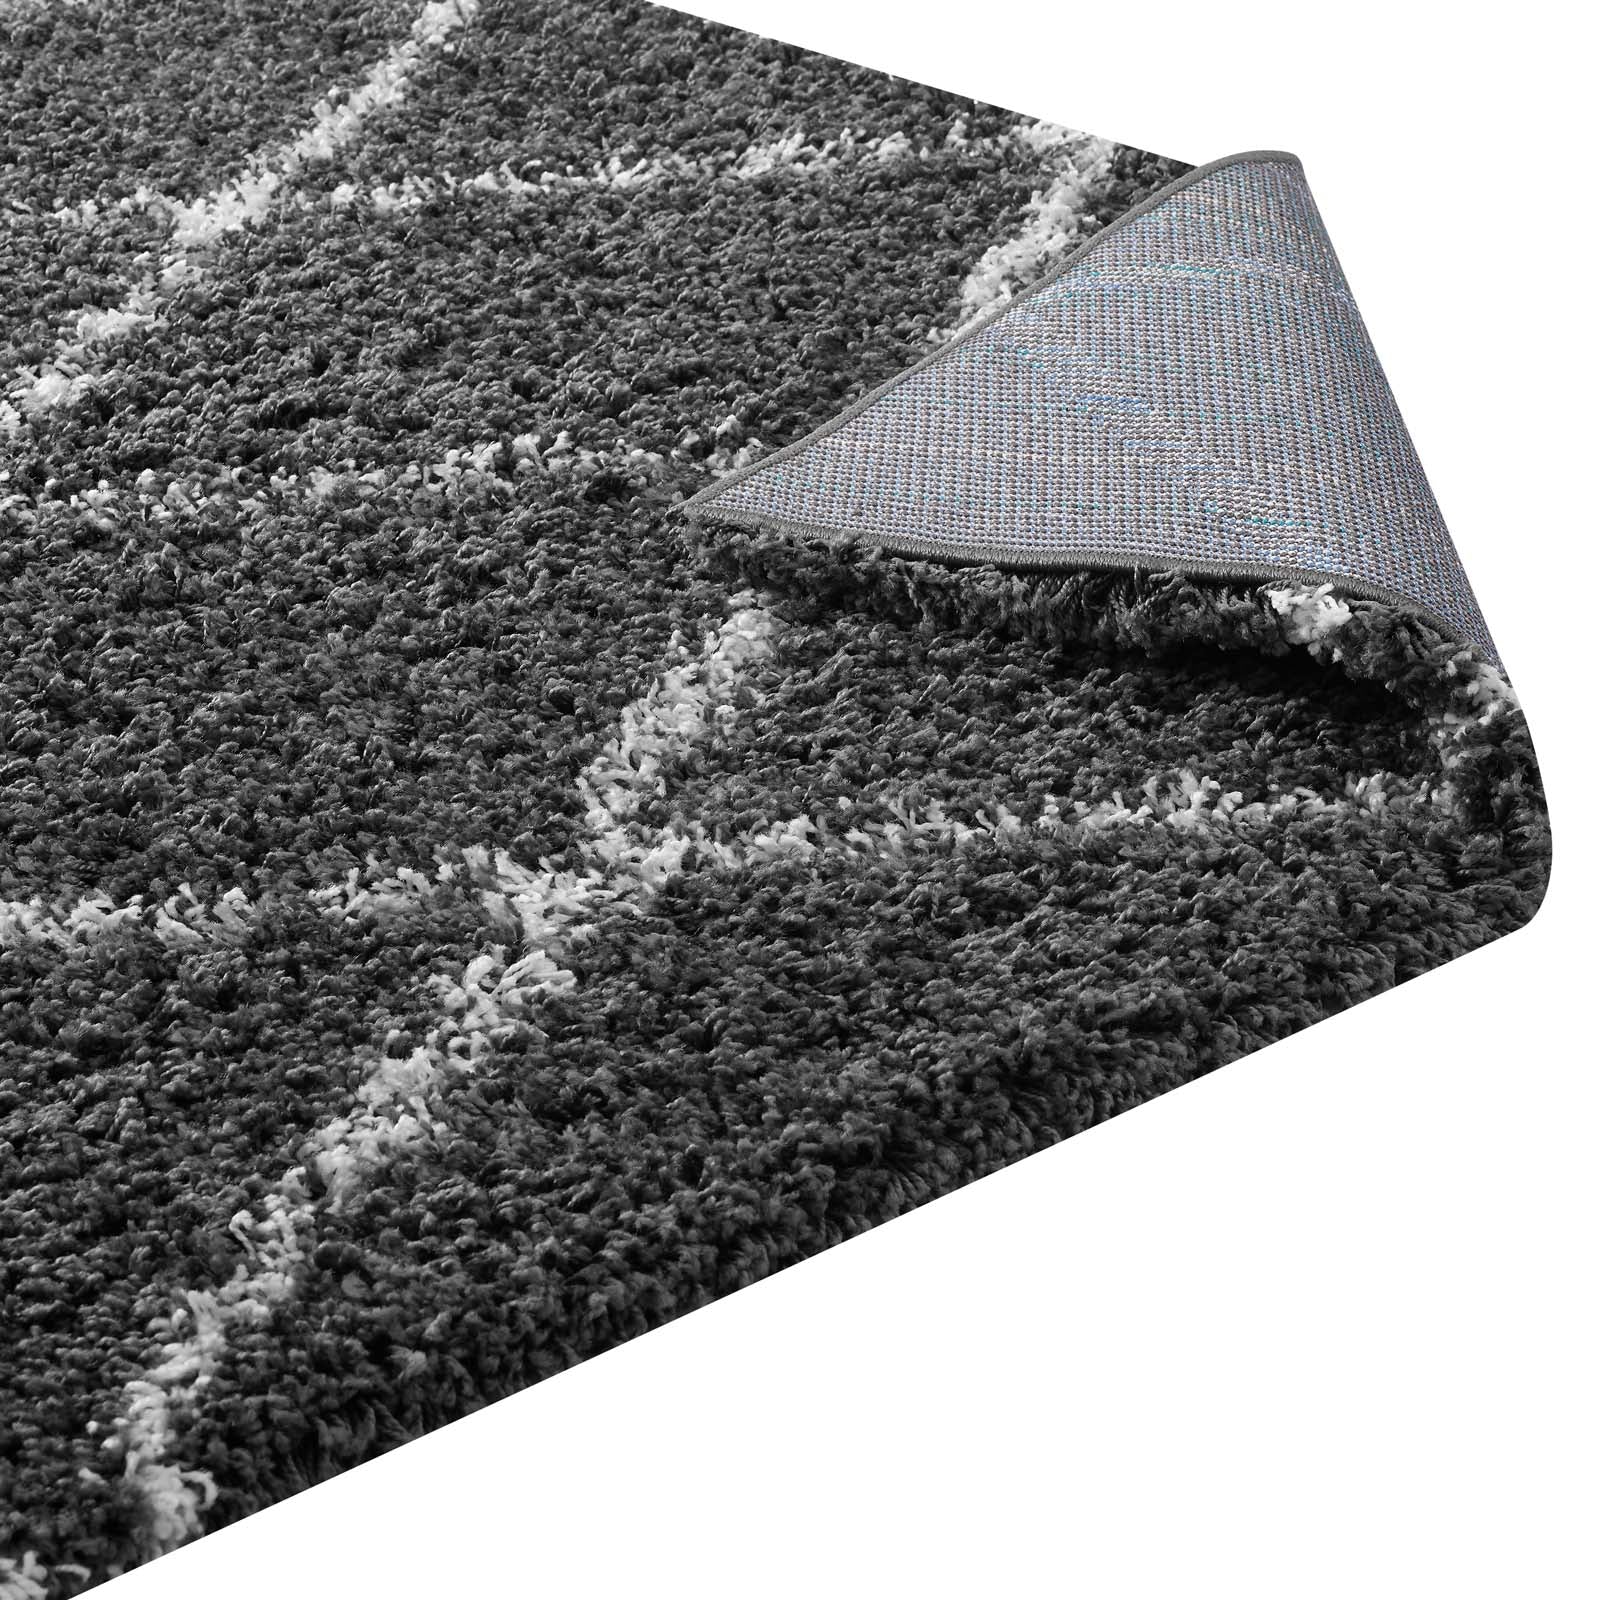 Modway Indoor Rugs - Toryn Diamond Lattice 5' x 8' Shag Area Rug Dark Gray & Ivory